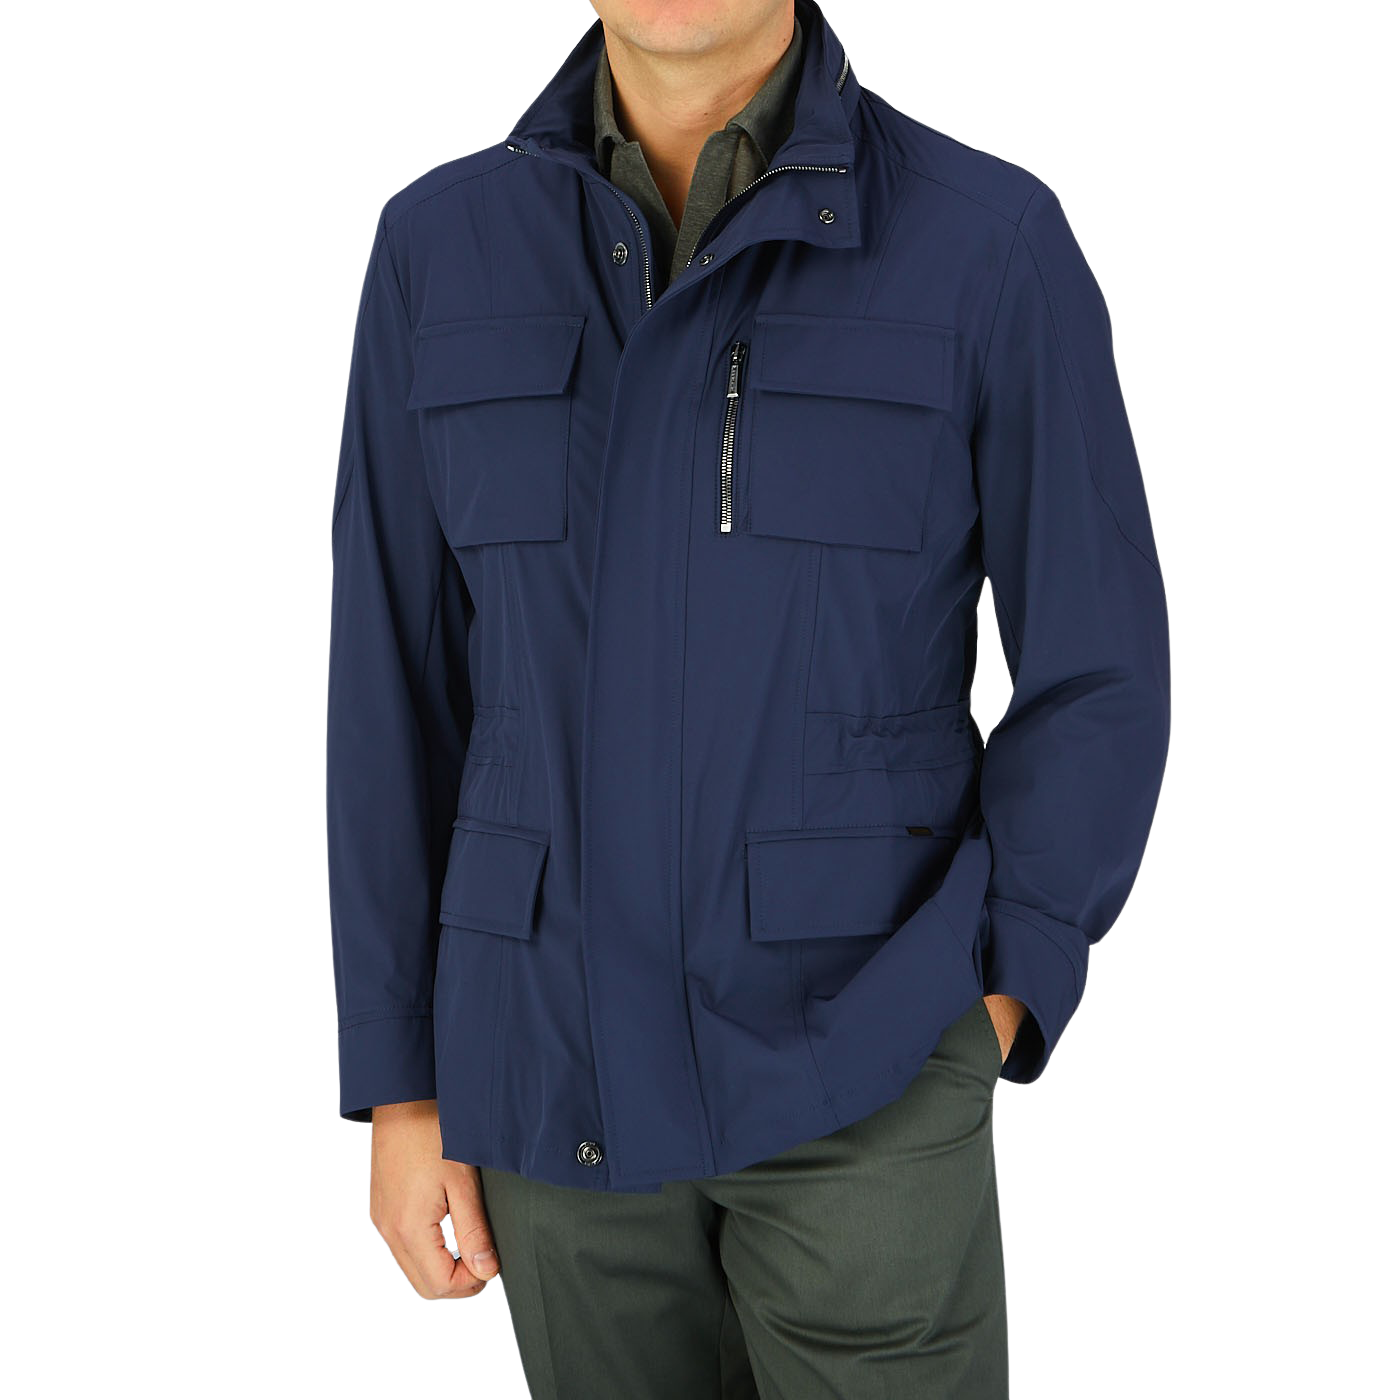 A man wearing the Moorer Dark Blue Lightweight Nylon Field Jacket.